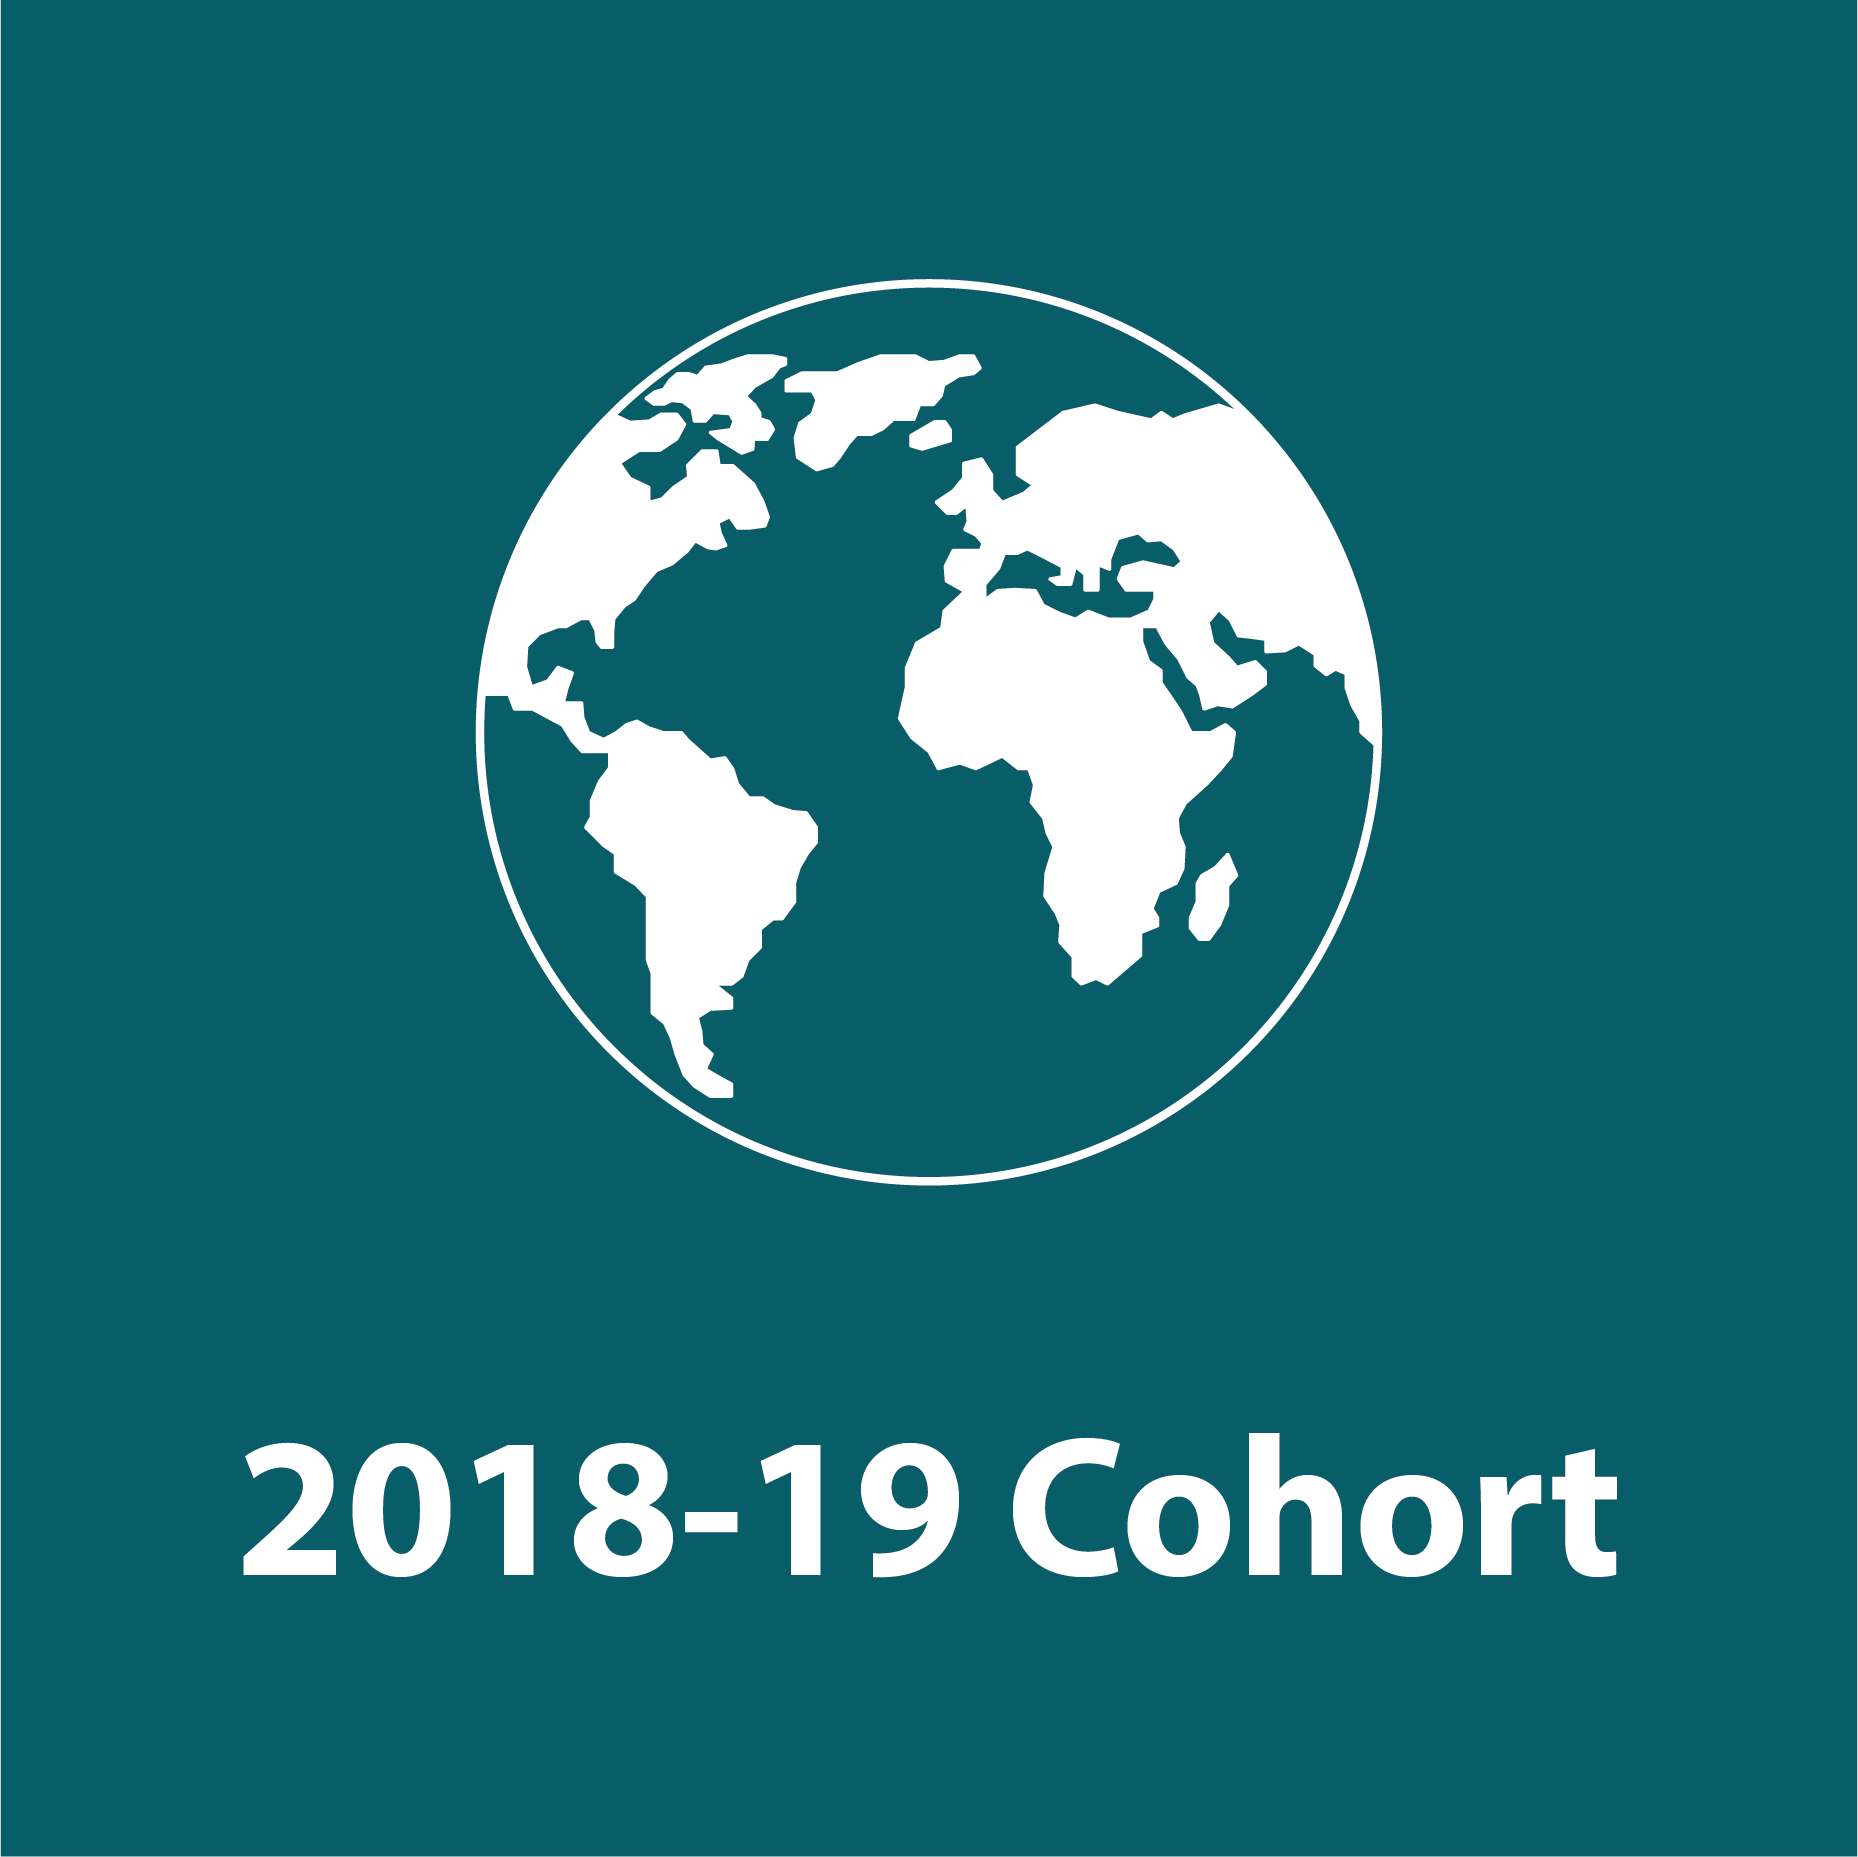 Borysiewicz Fellows 2018-19 Cohort